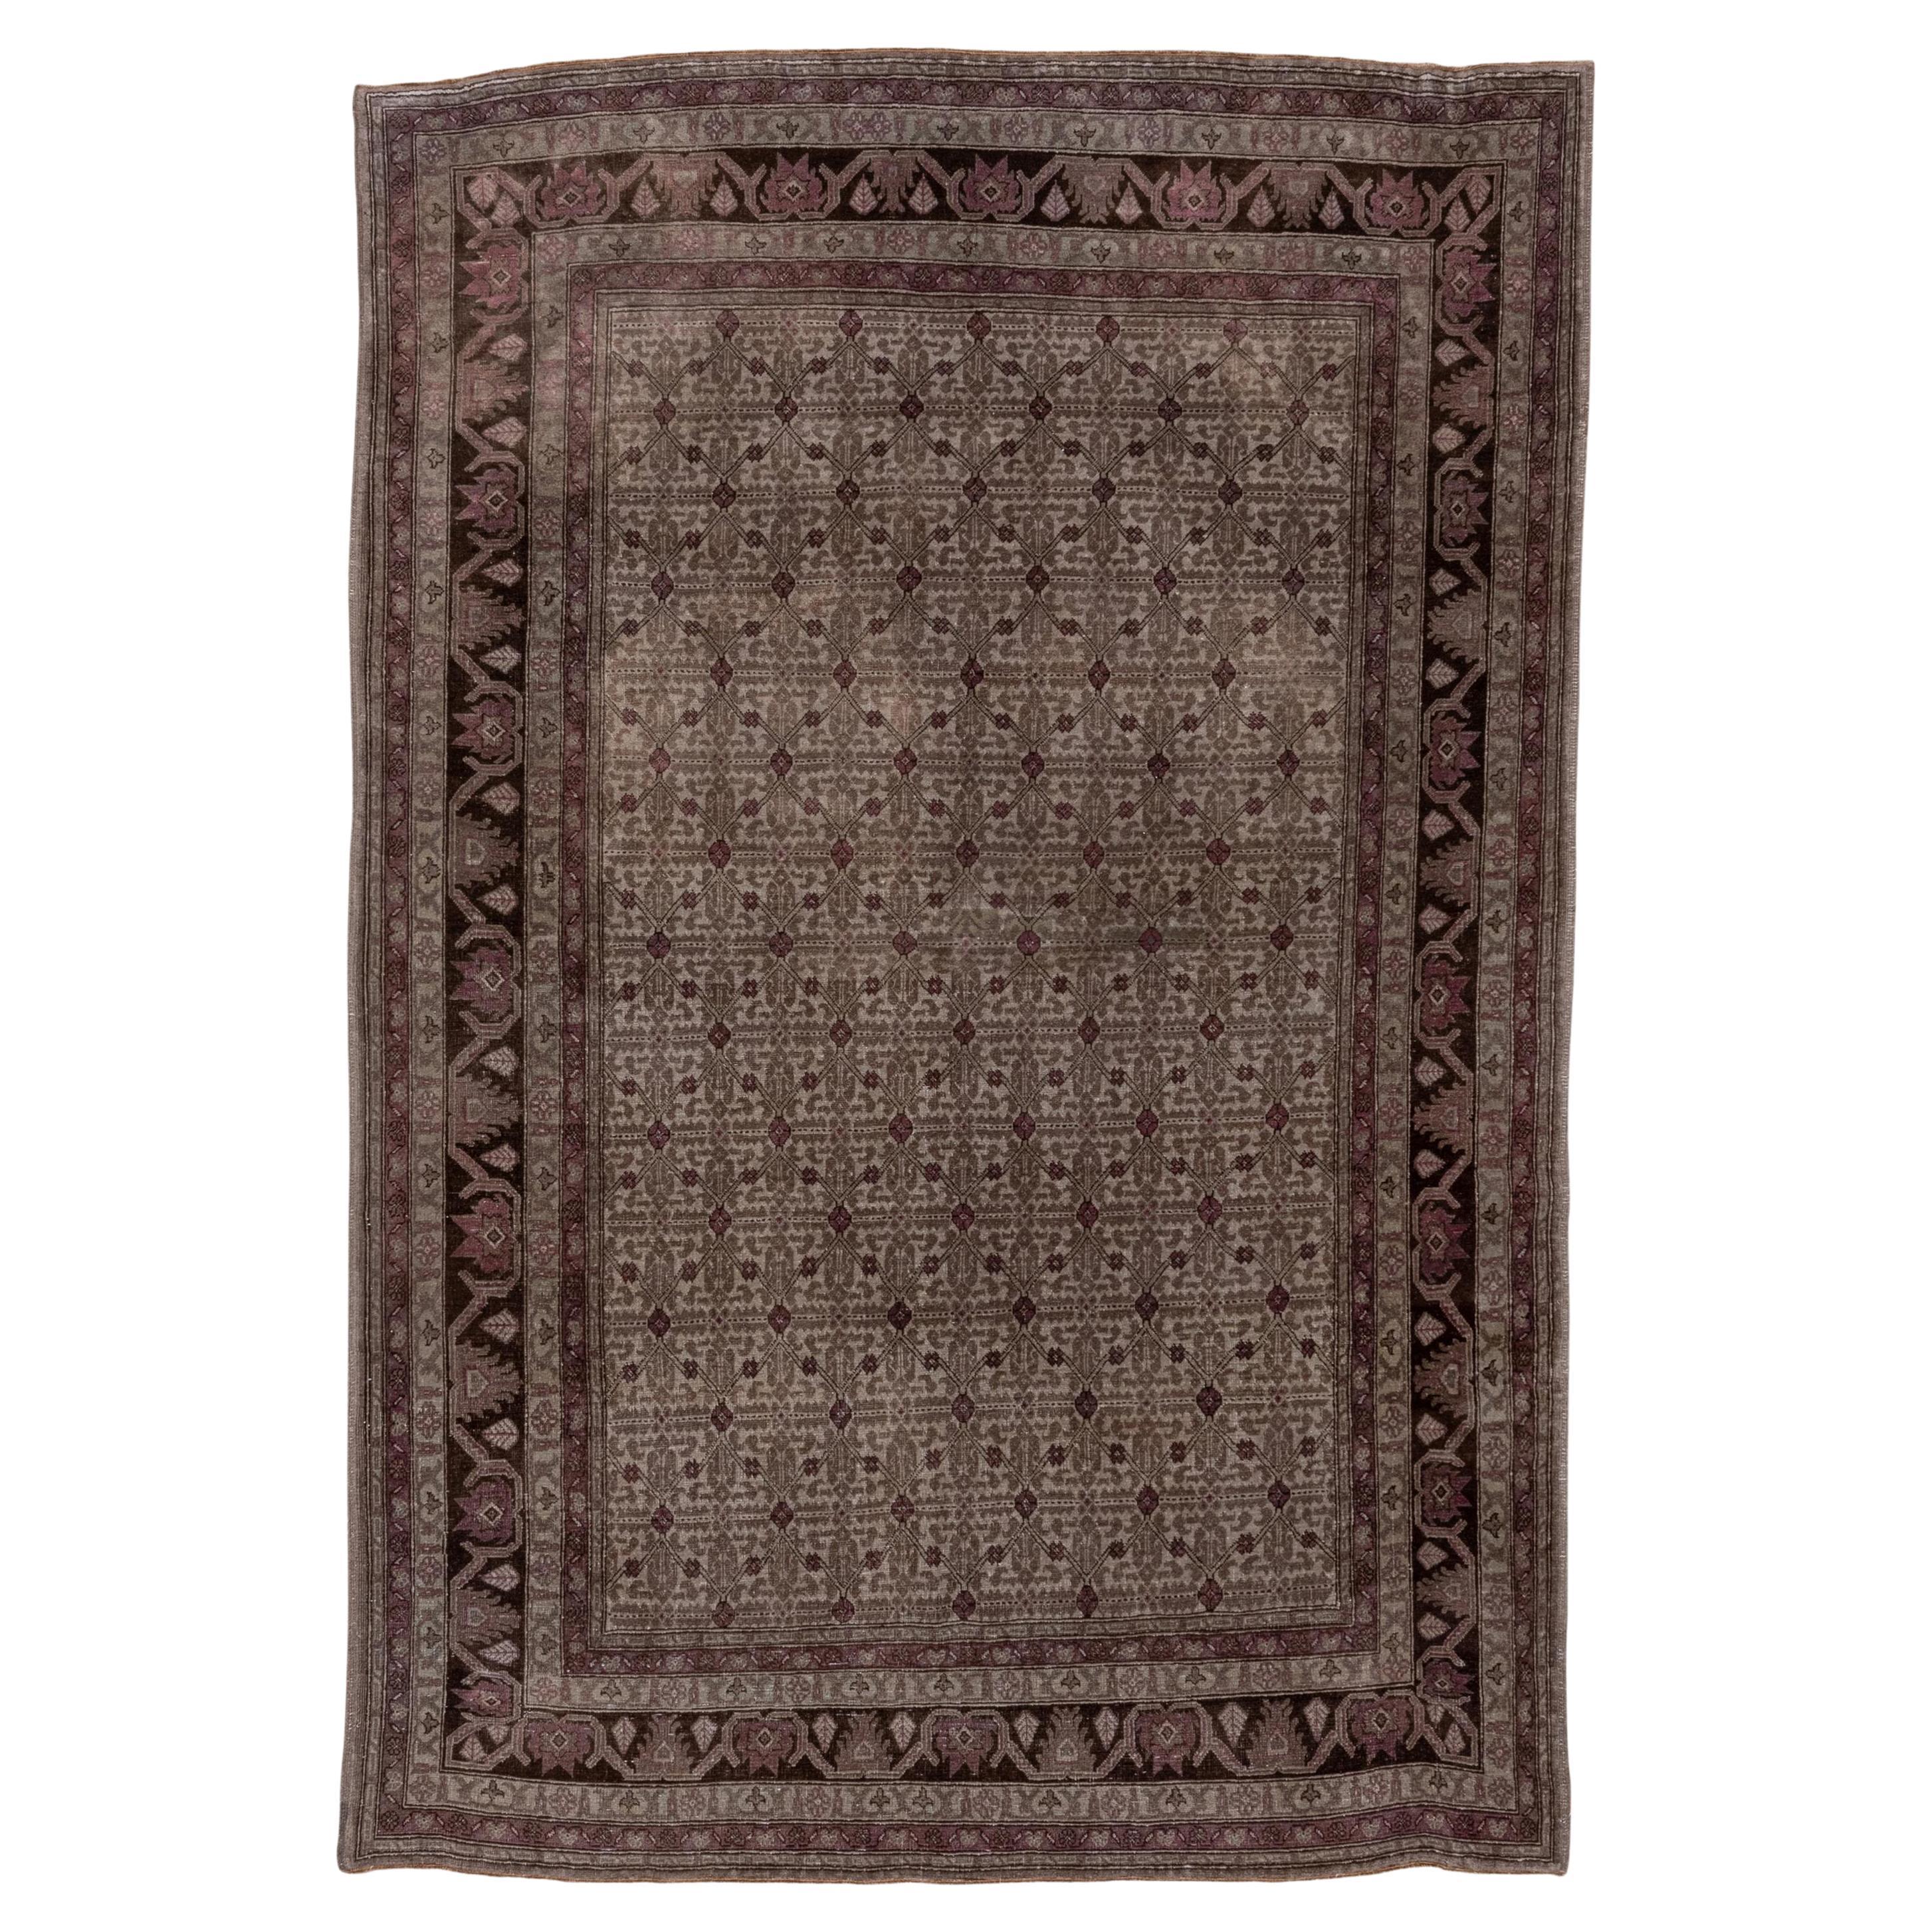 Vtintage Turkish Konya Carpet, circa 1940s